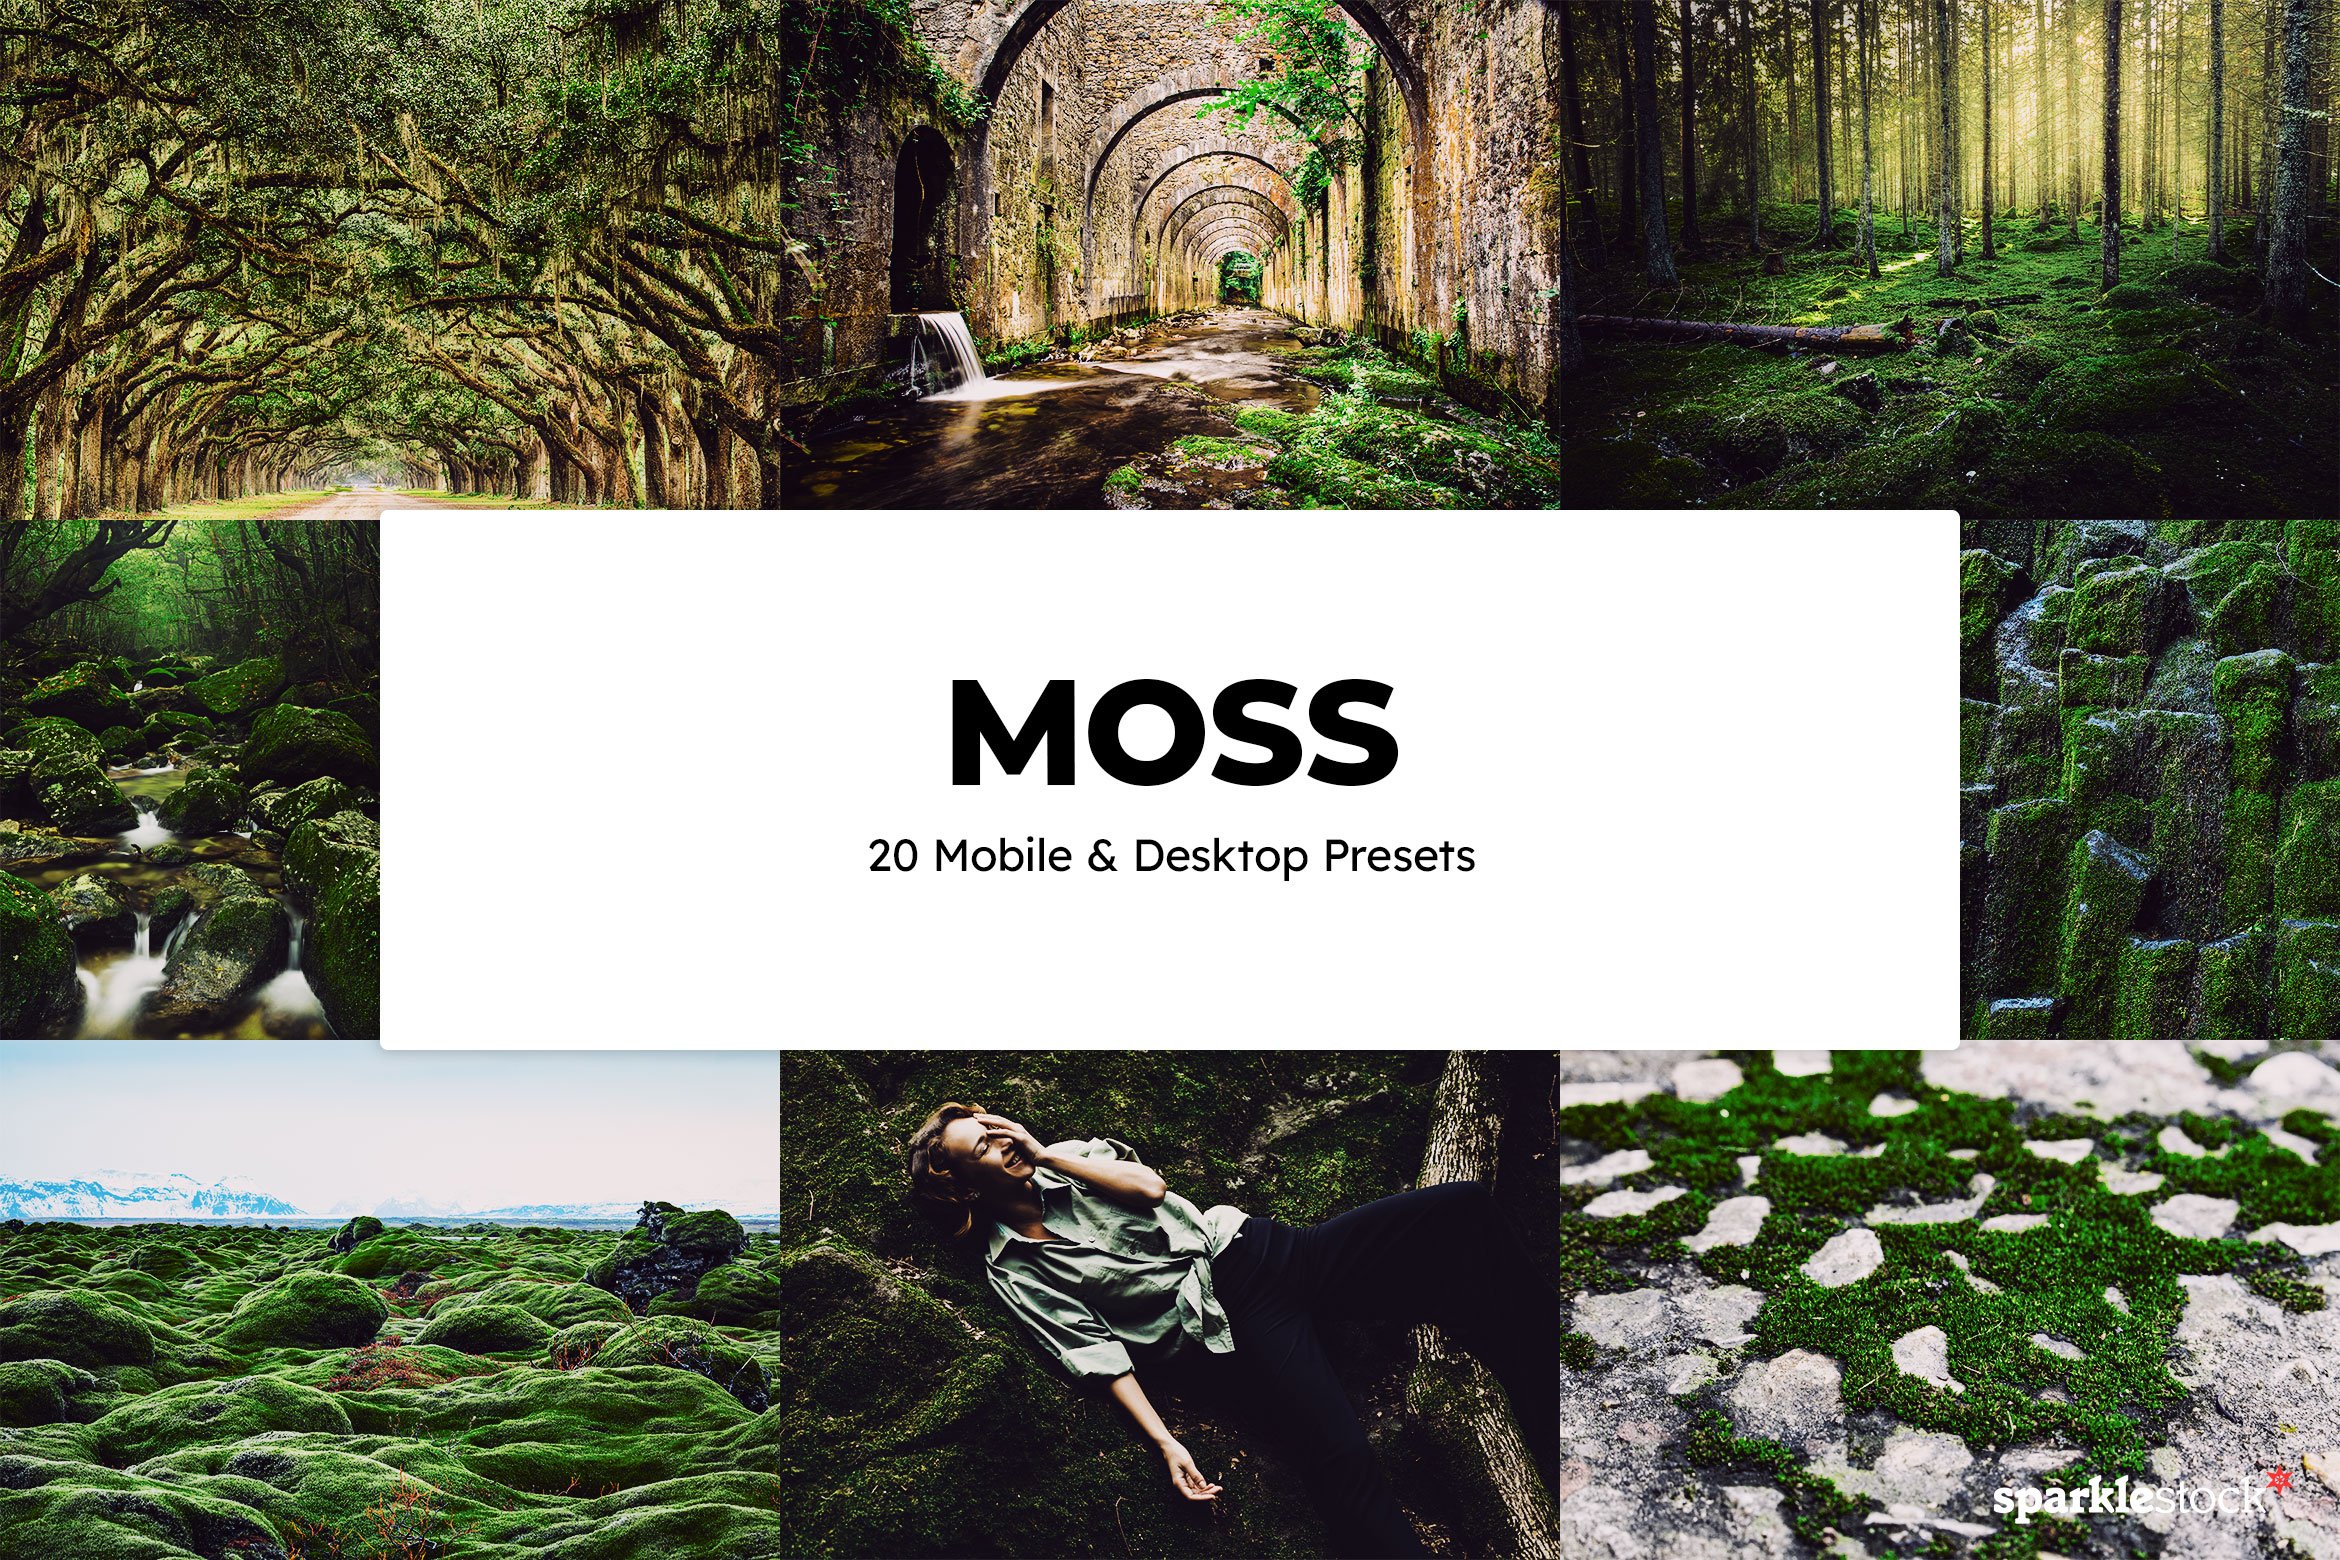 20 Moss Lightroom Presets & LUTscover image.